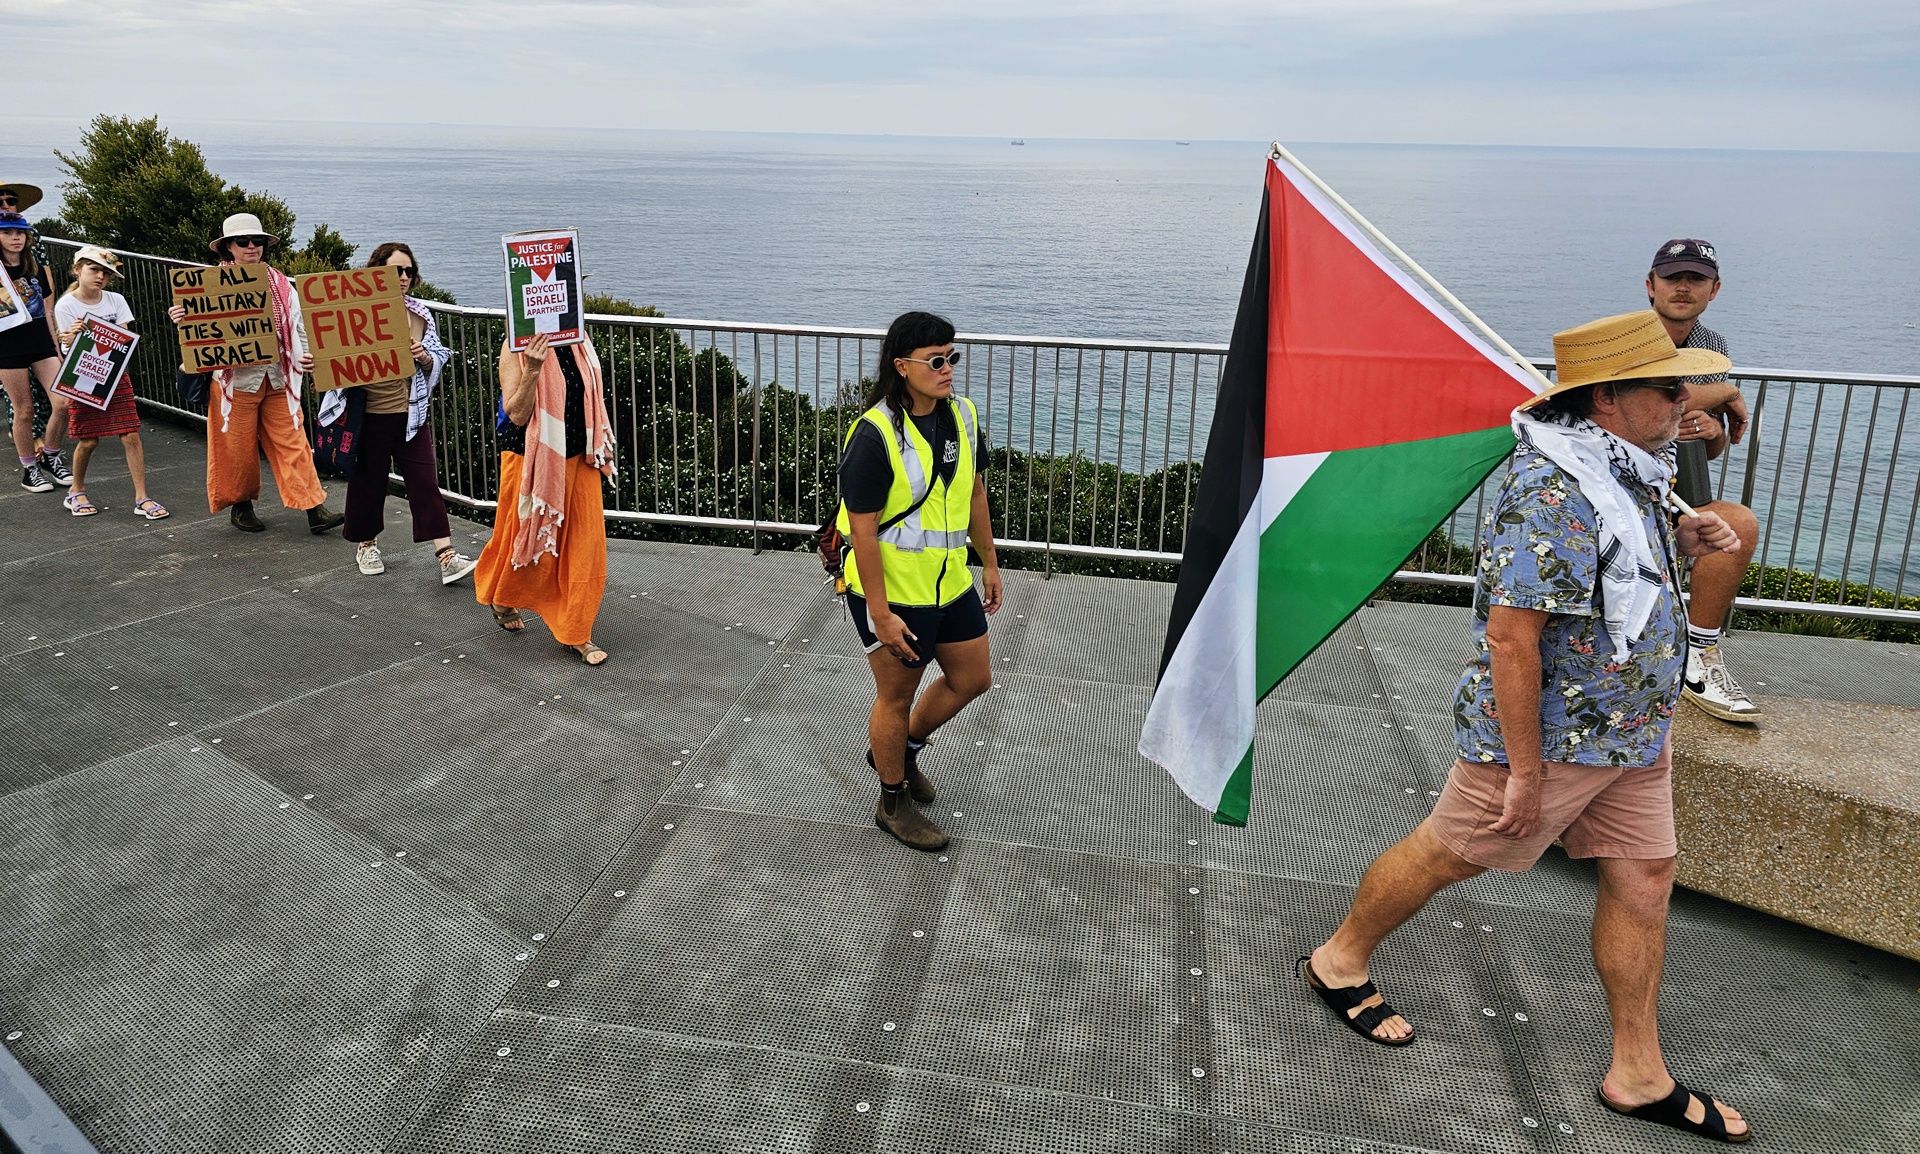 Muloobinba/Newcastle Good Friday march for Palestine